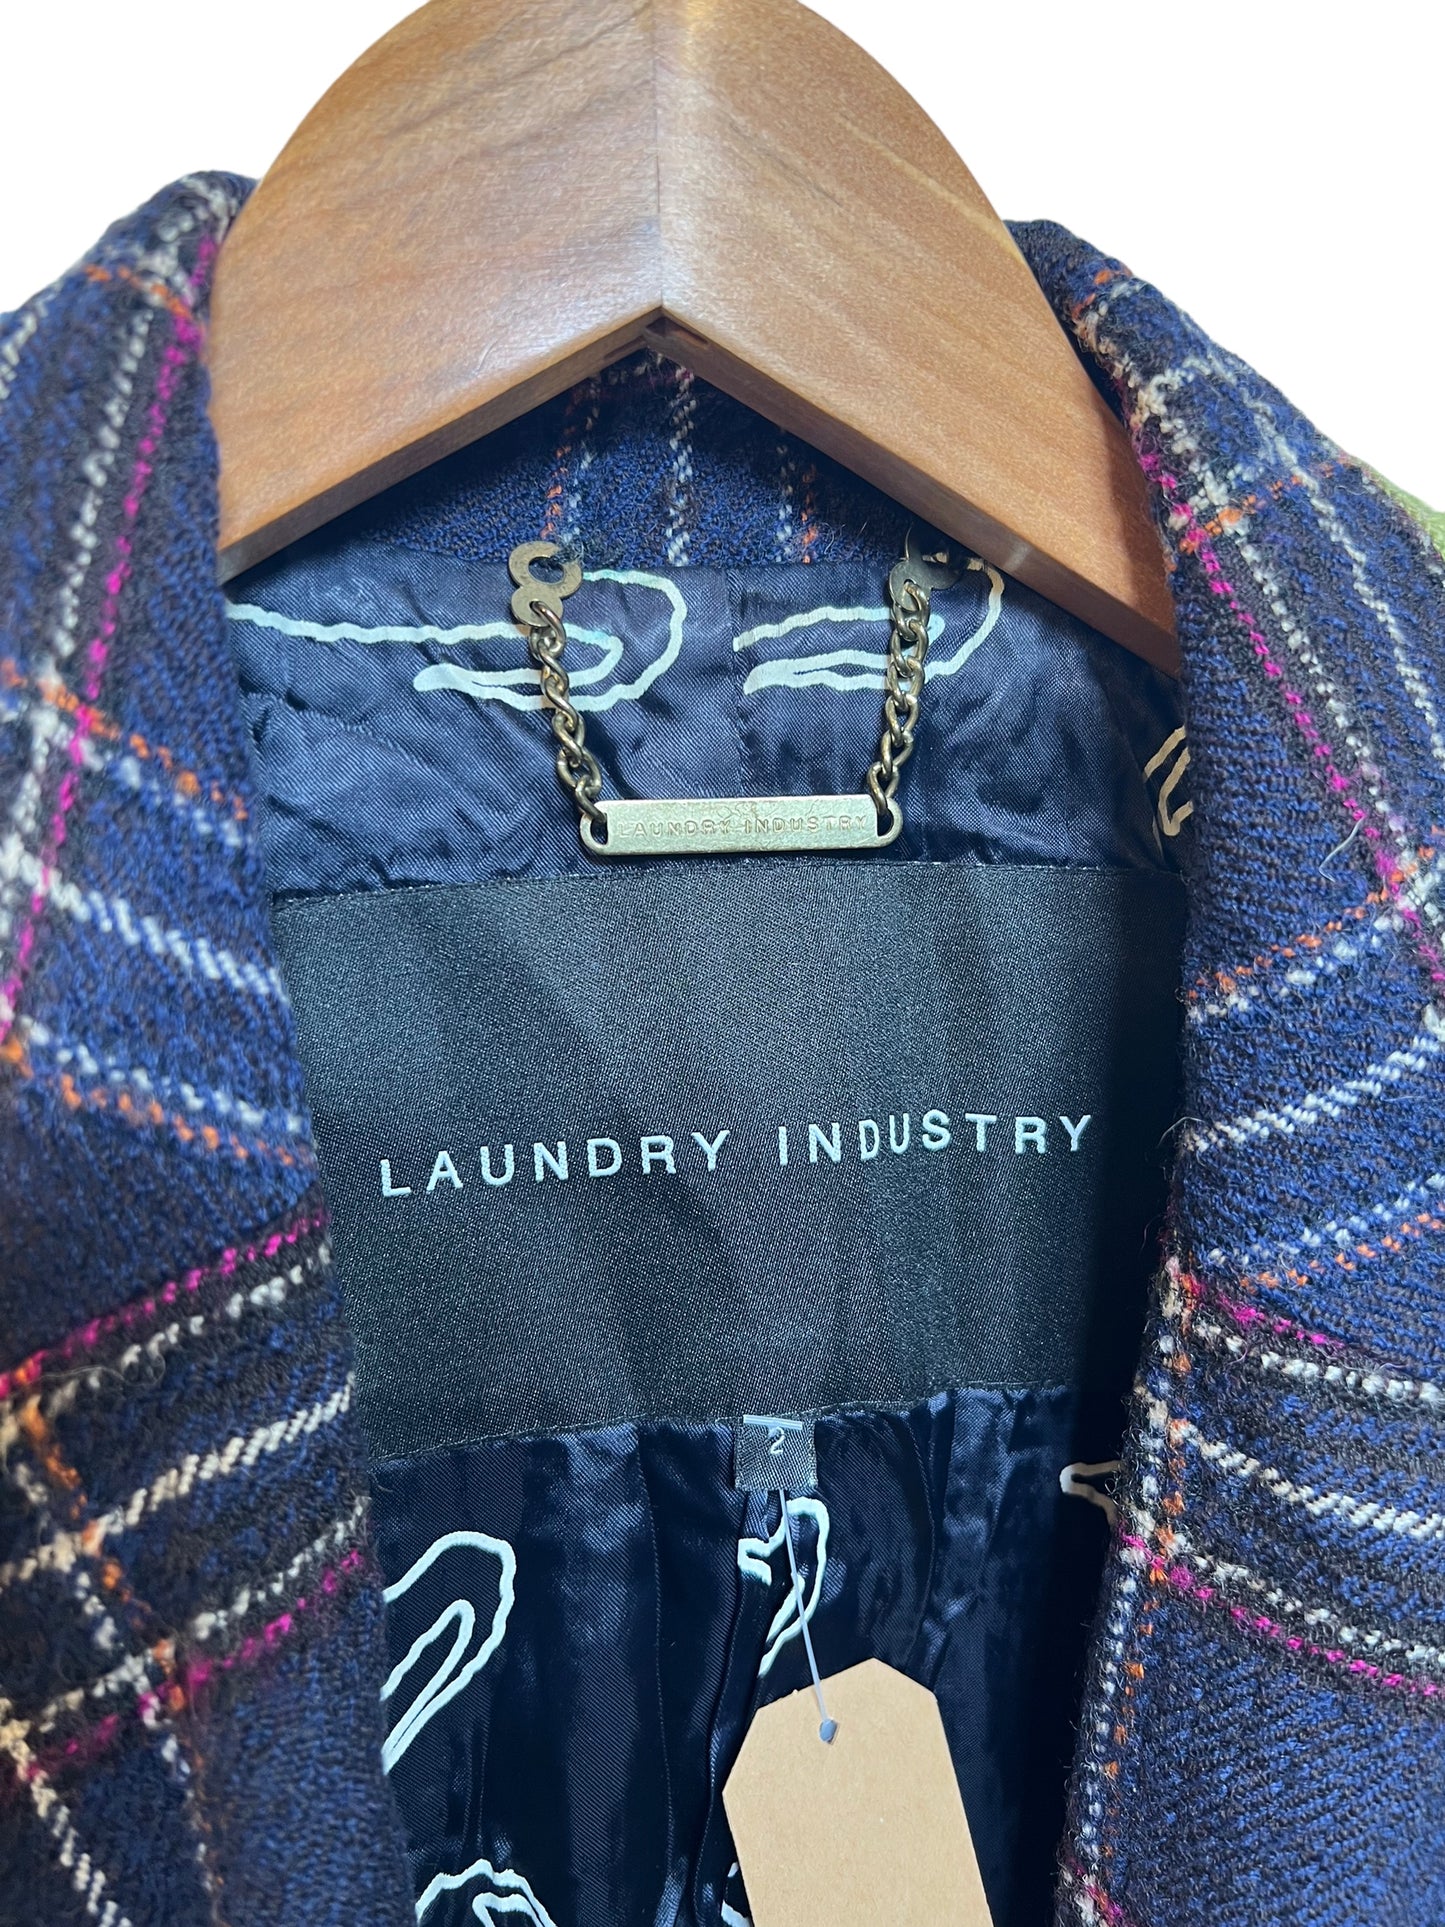 Laundry Industry Women’s Blazer (Size M)